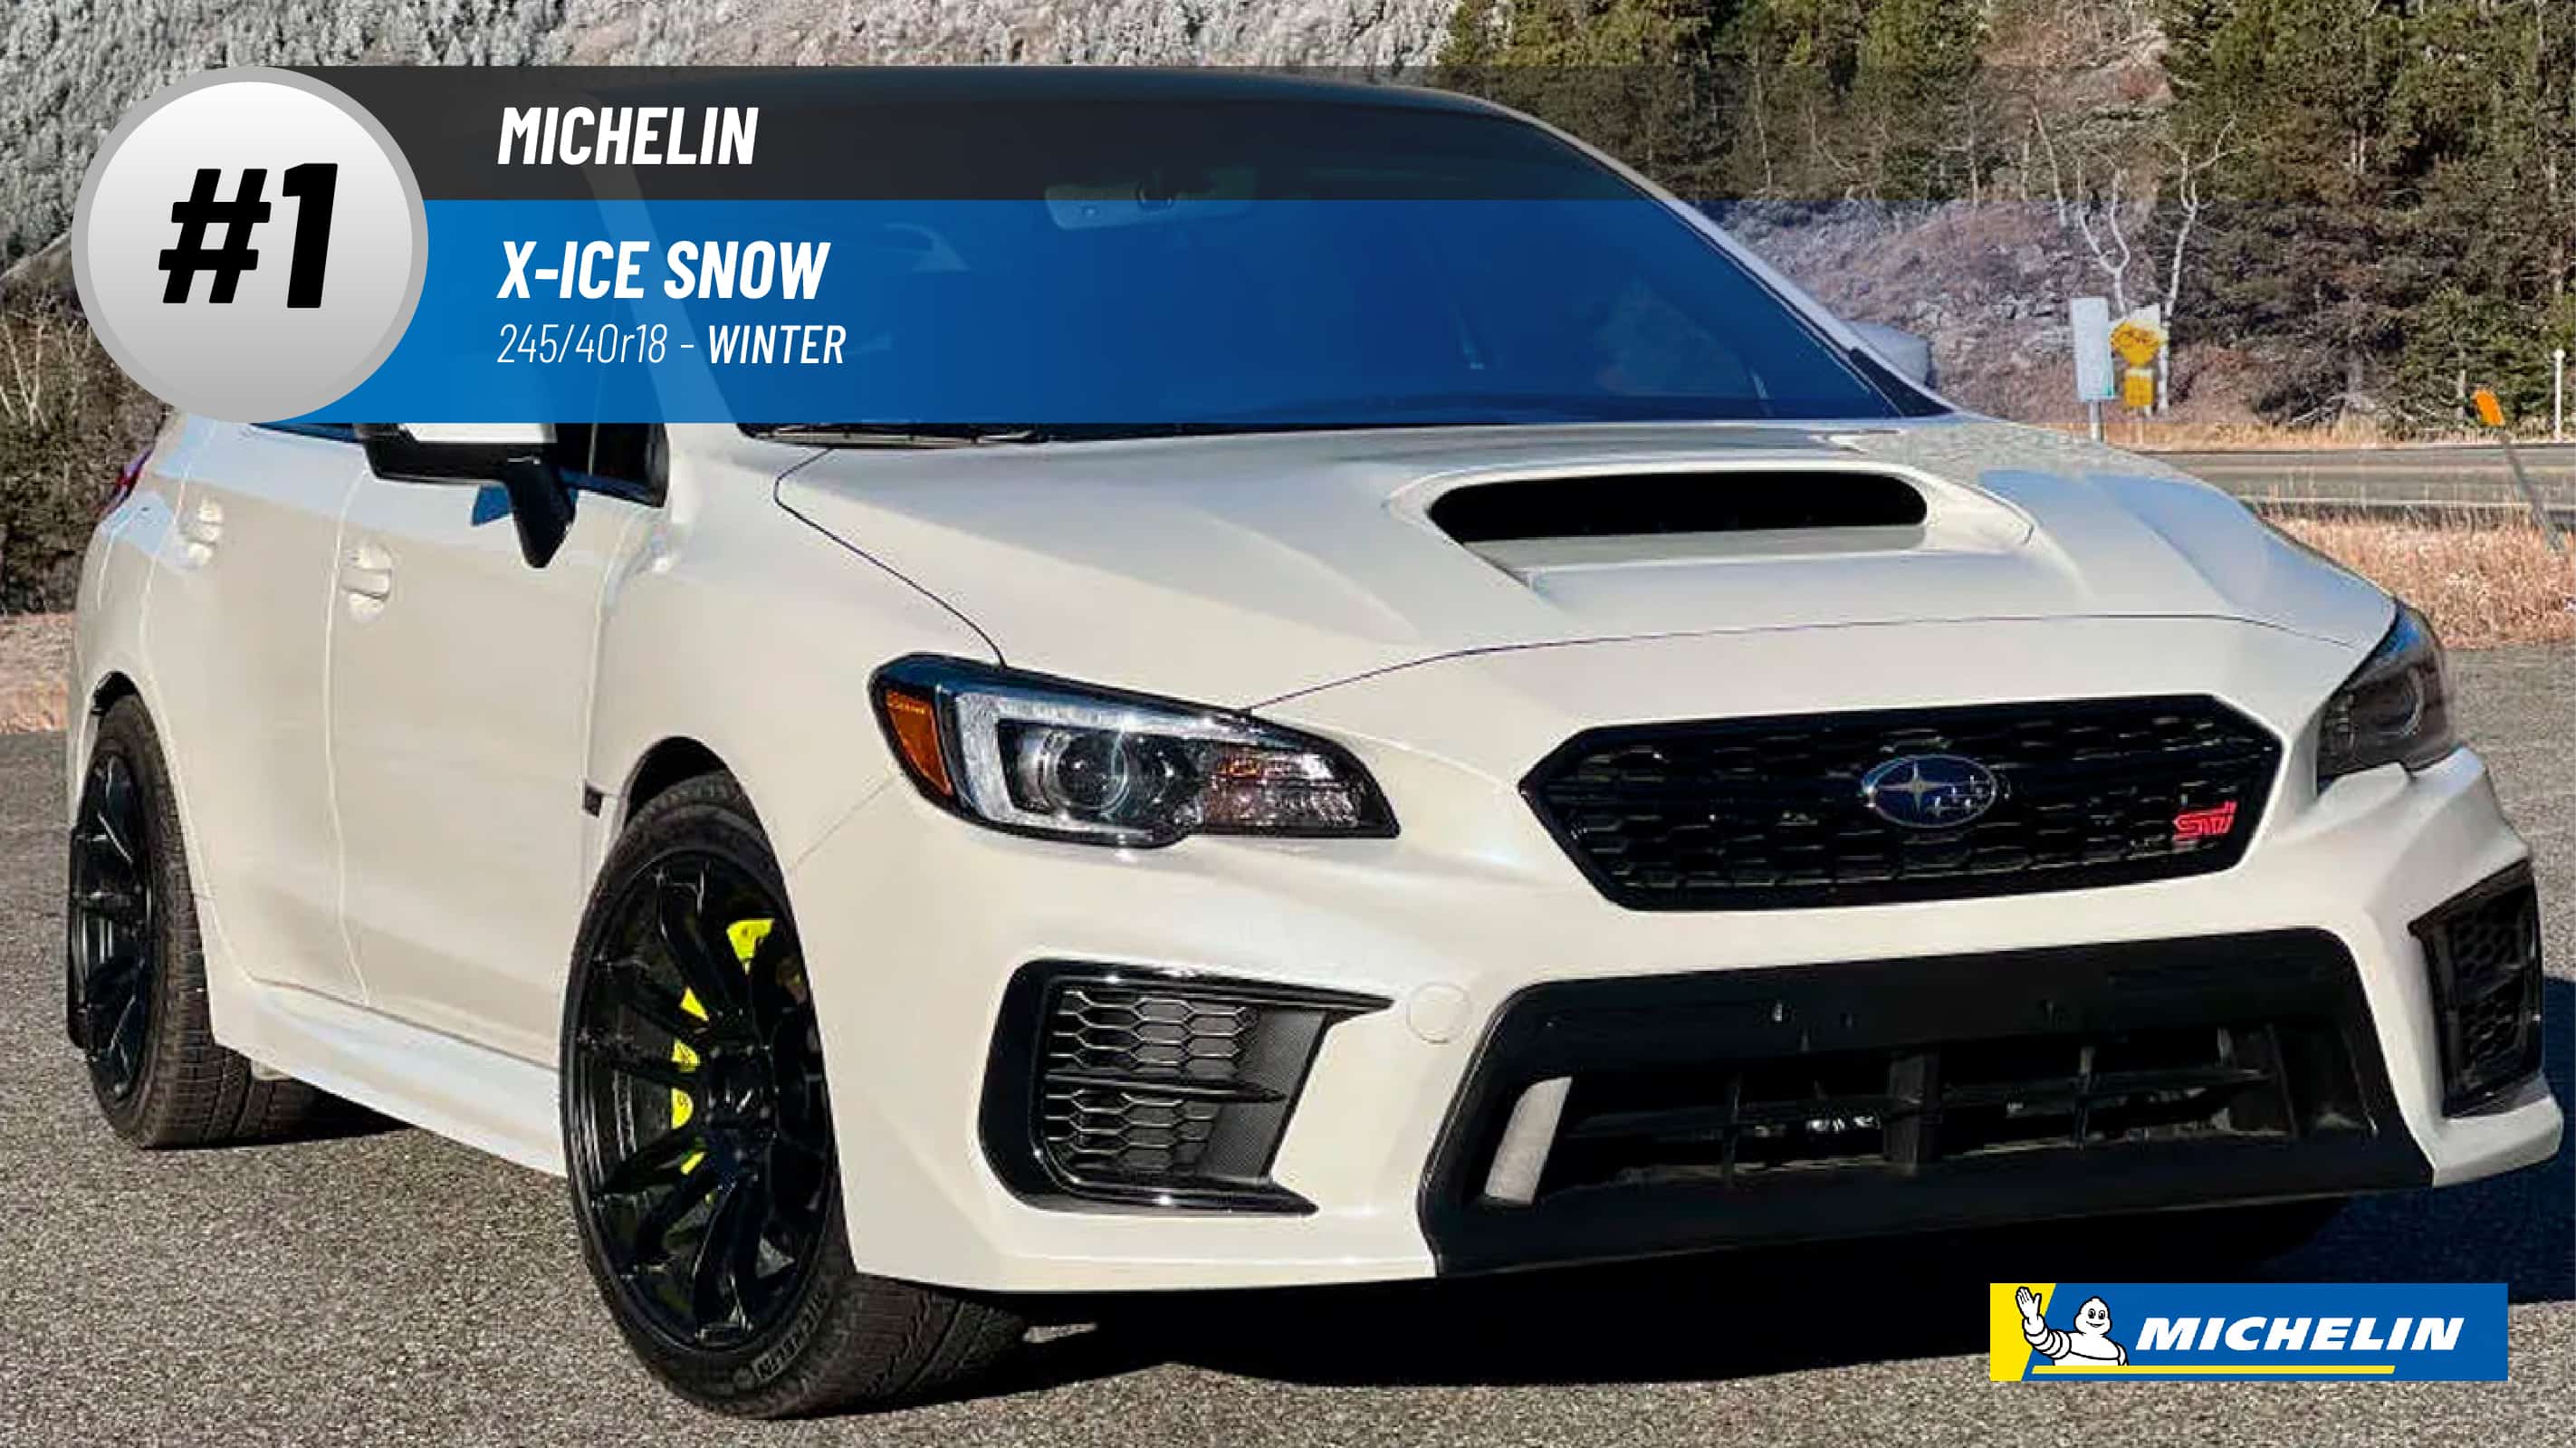 Top #1 Winter Tires: Michelin X-ICE Snow – 245/40r18